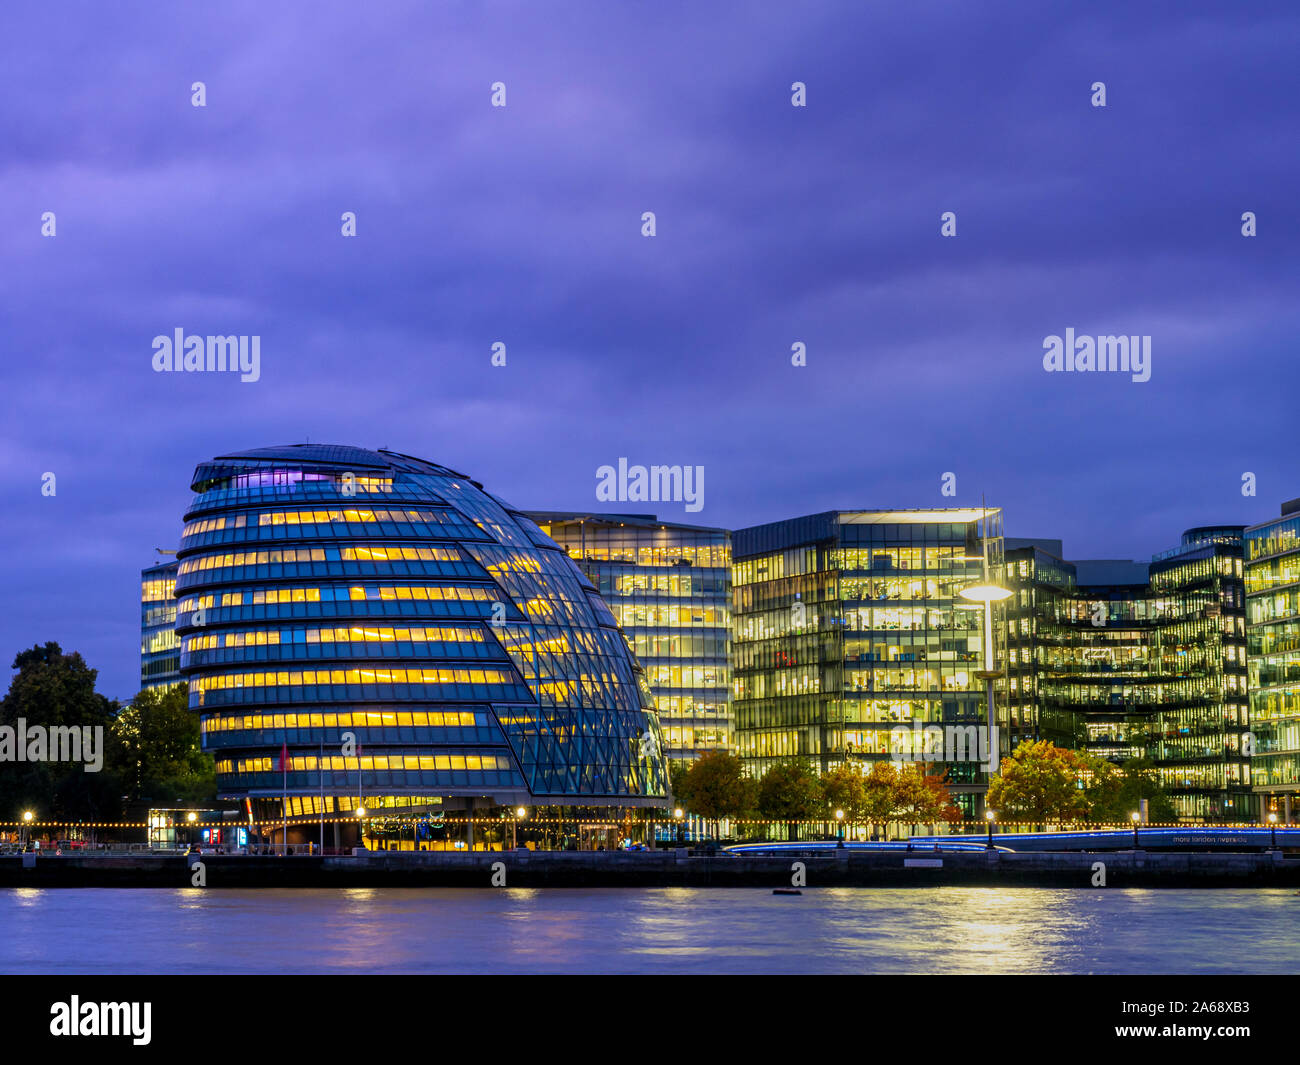 City Hall at dusk, London, UK. Stock Photo